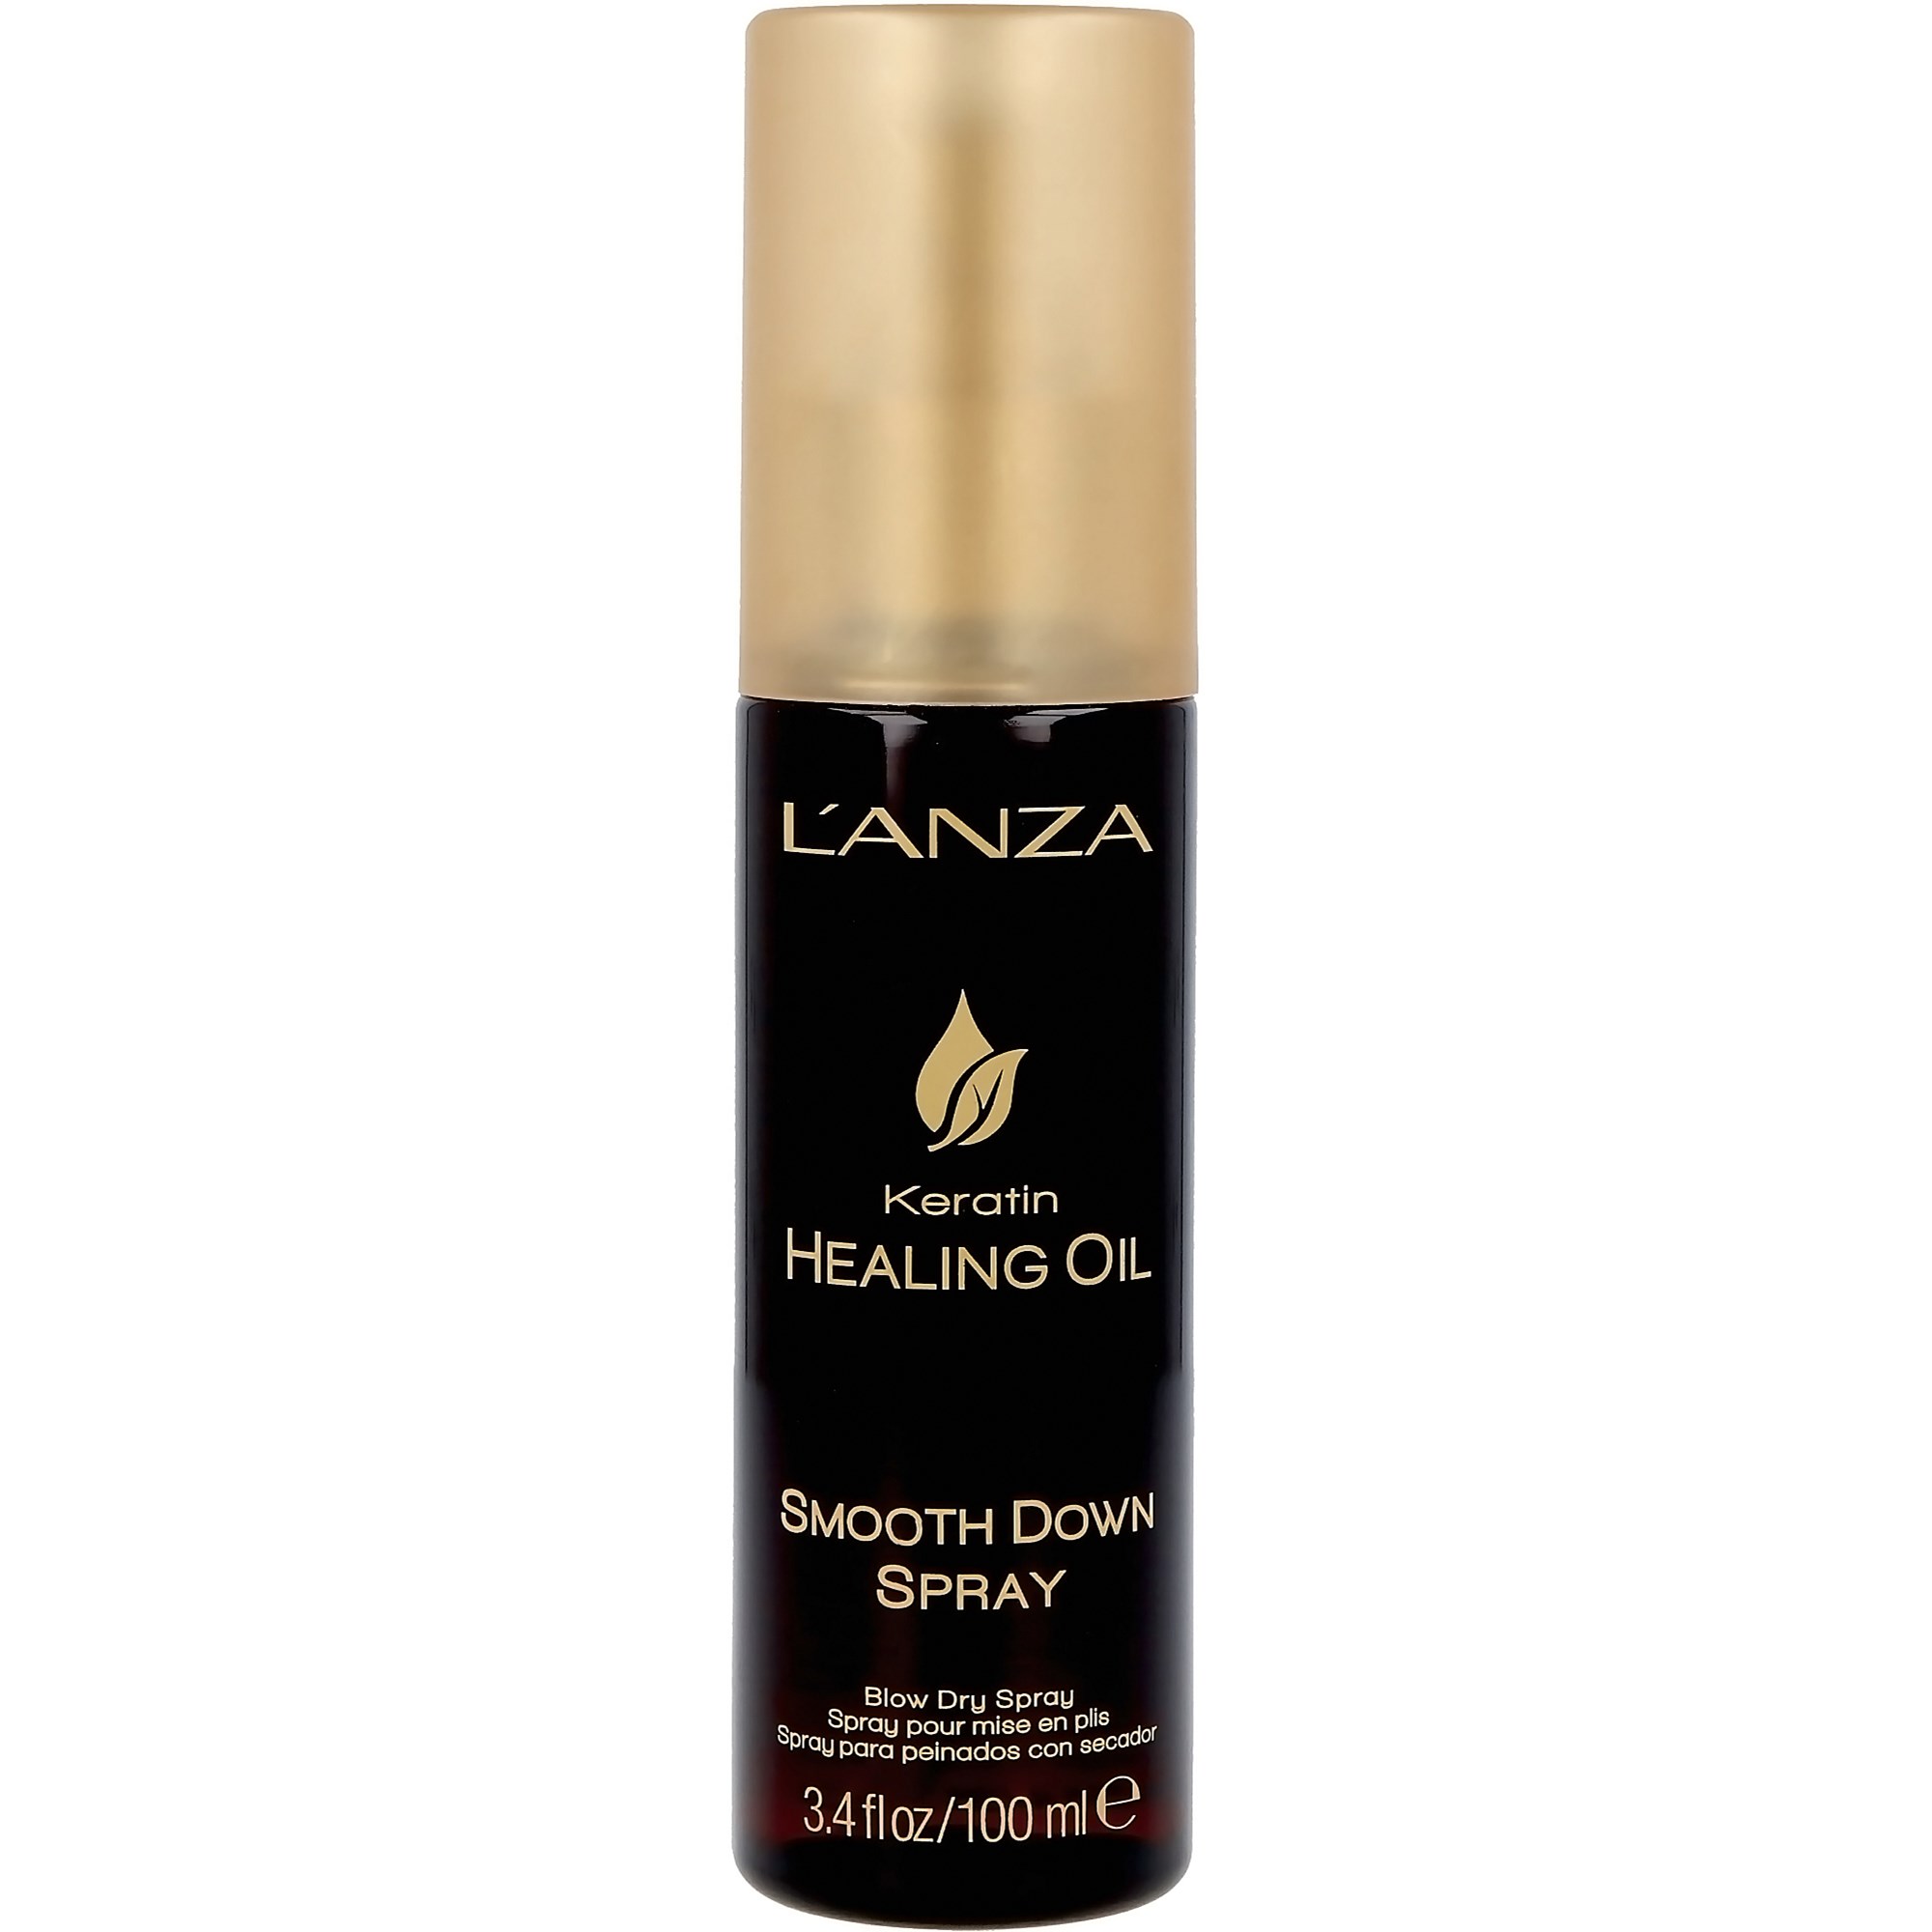 Lanza Keratin Healing Oil Healing Oil Smooth Down Spray